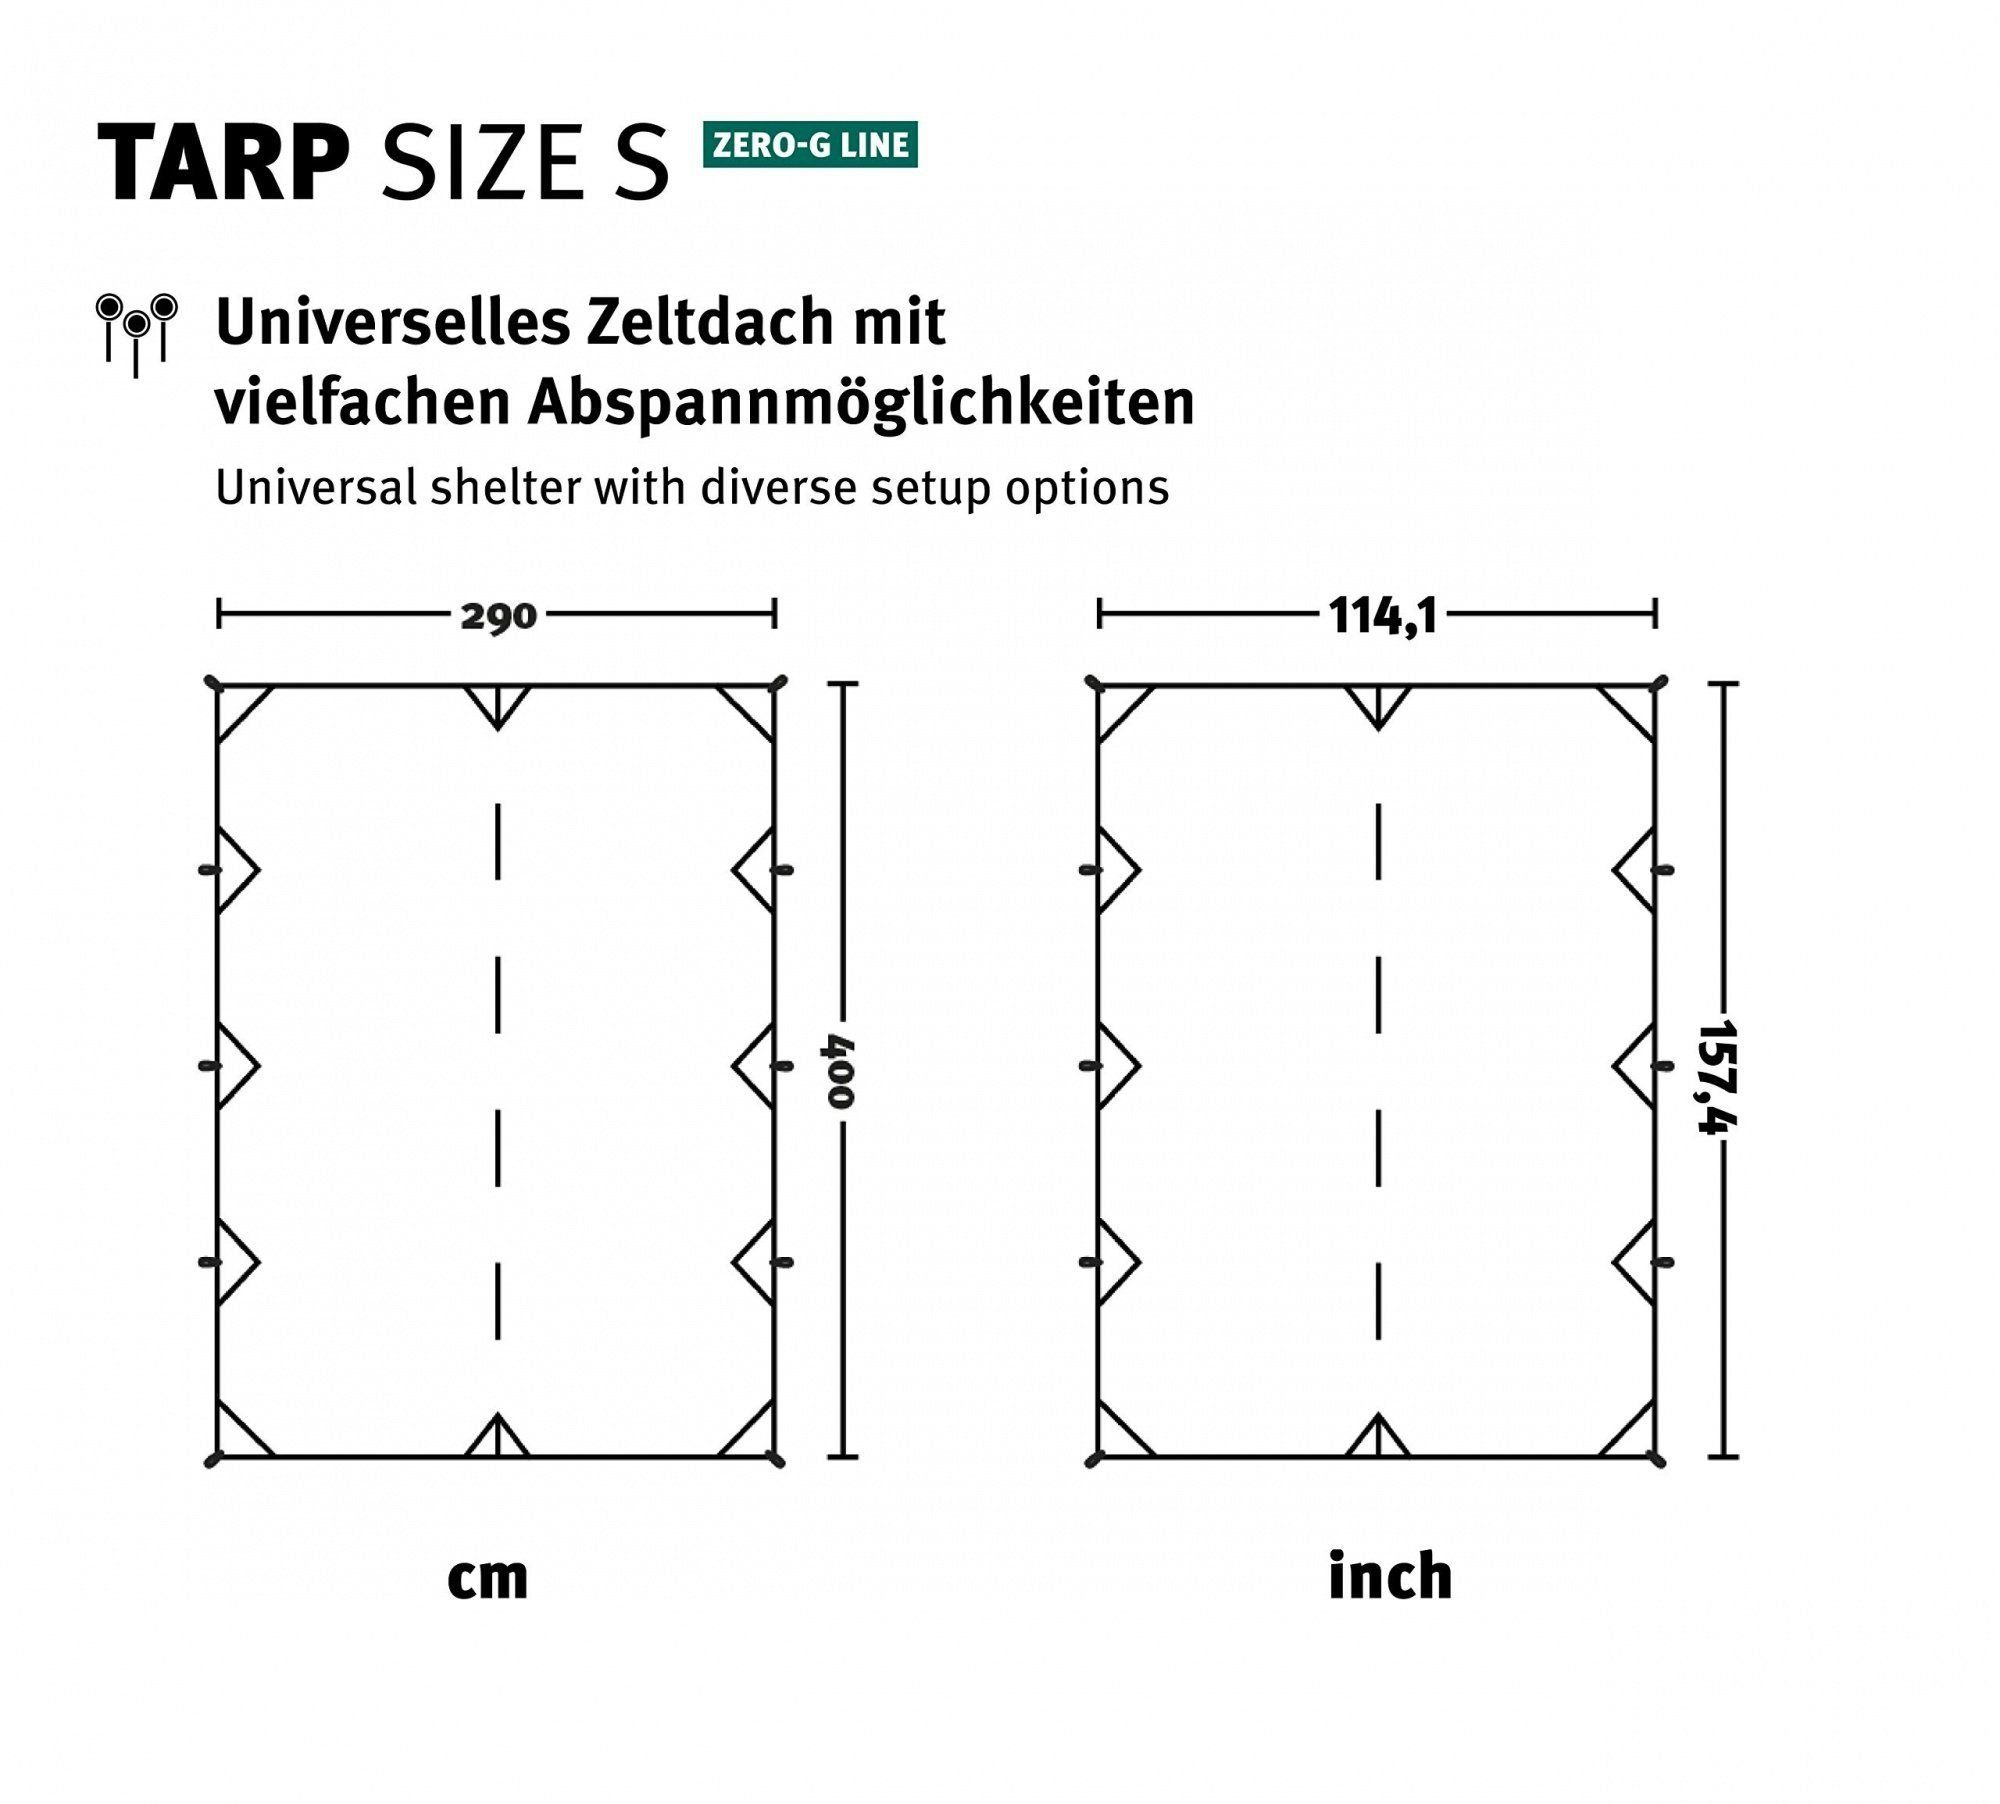 Tents Tarp Personen: Zero-G 290 - S cm, 400 Wechsel 4, Zeltdach, Tarp-Zelt Ultraleicht x Grün Line,